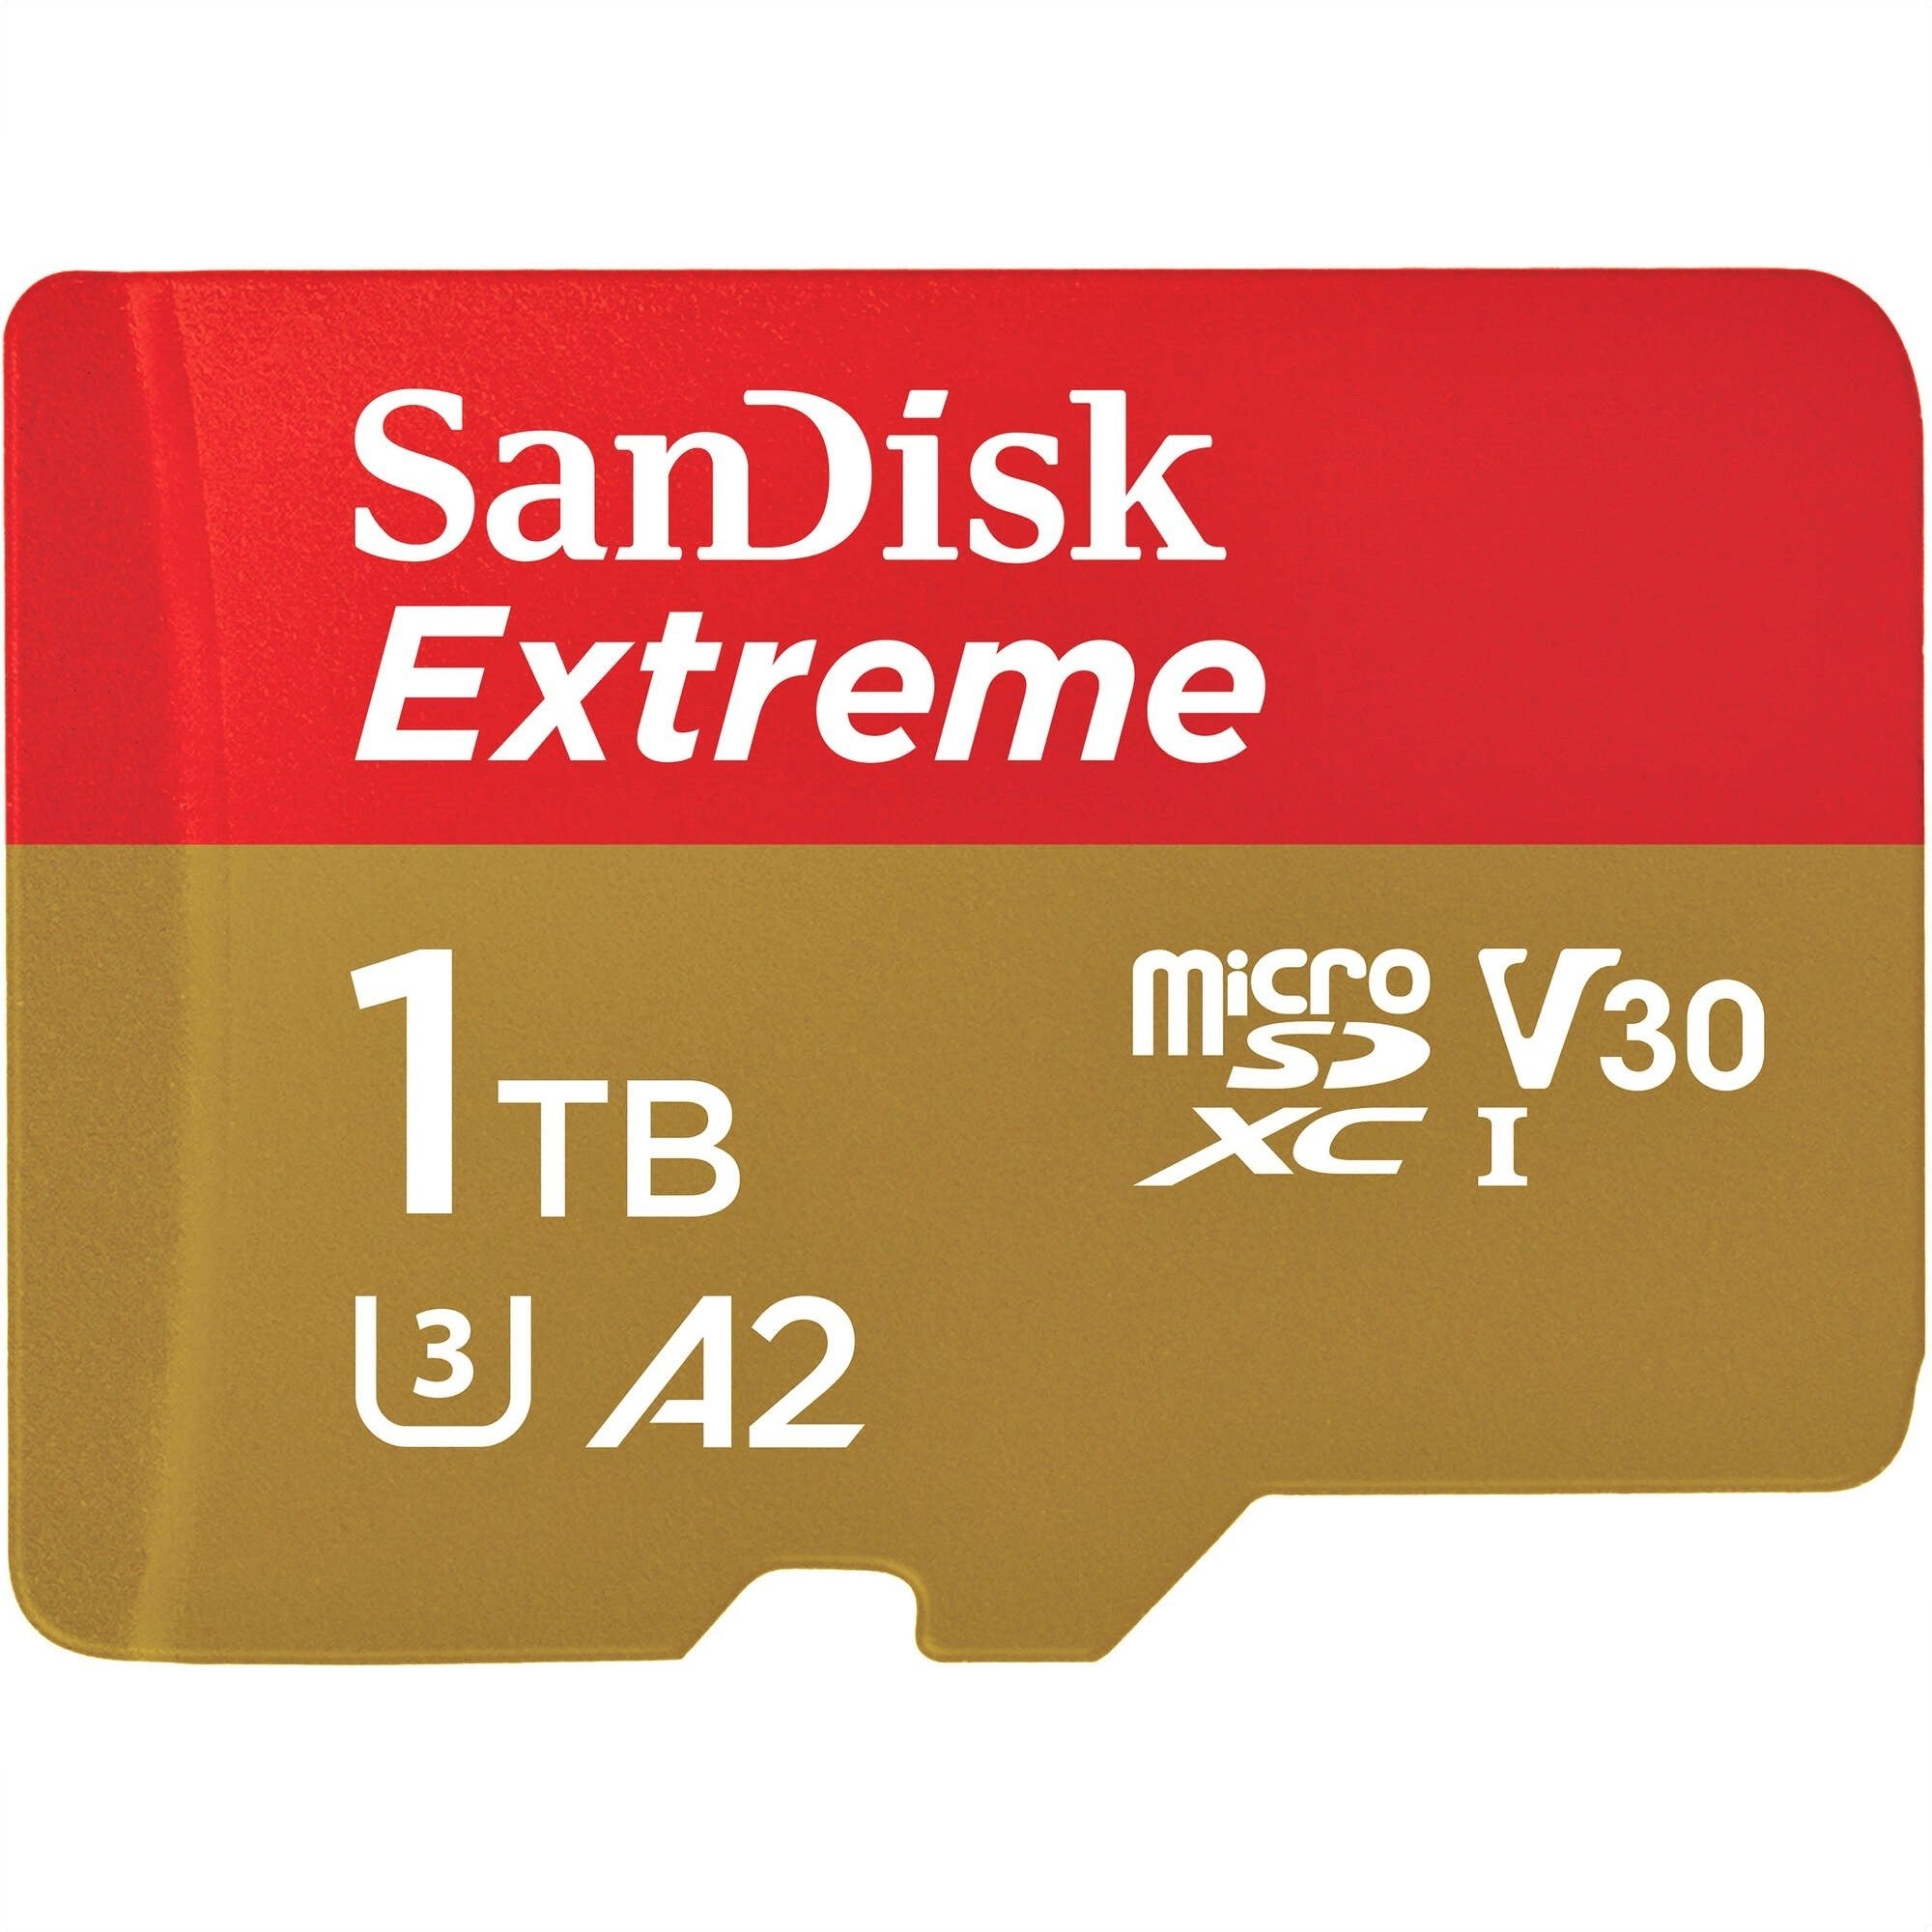 SanDisk 1TB Extreme UHS-I microSDXC Memory Card